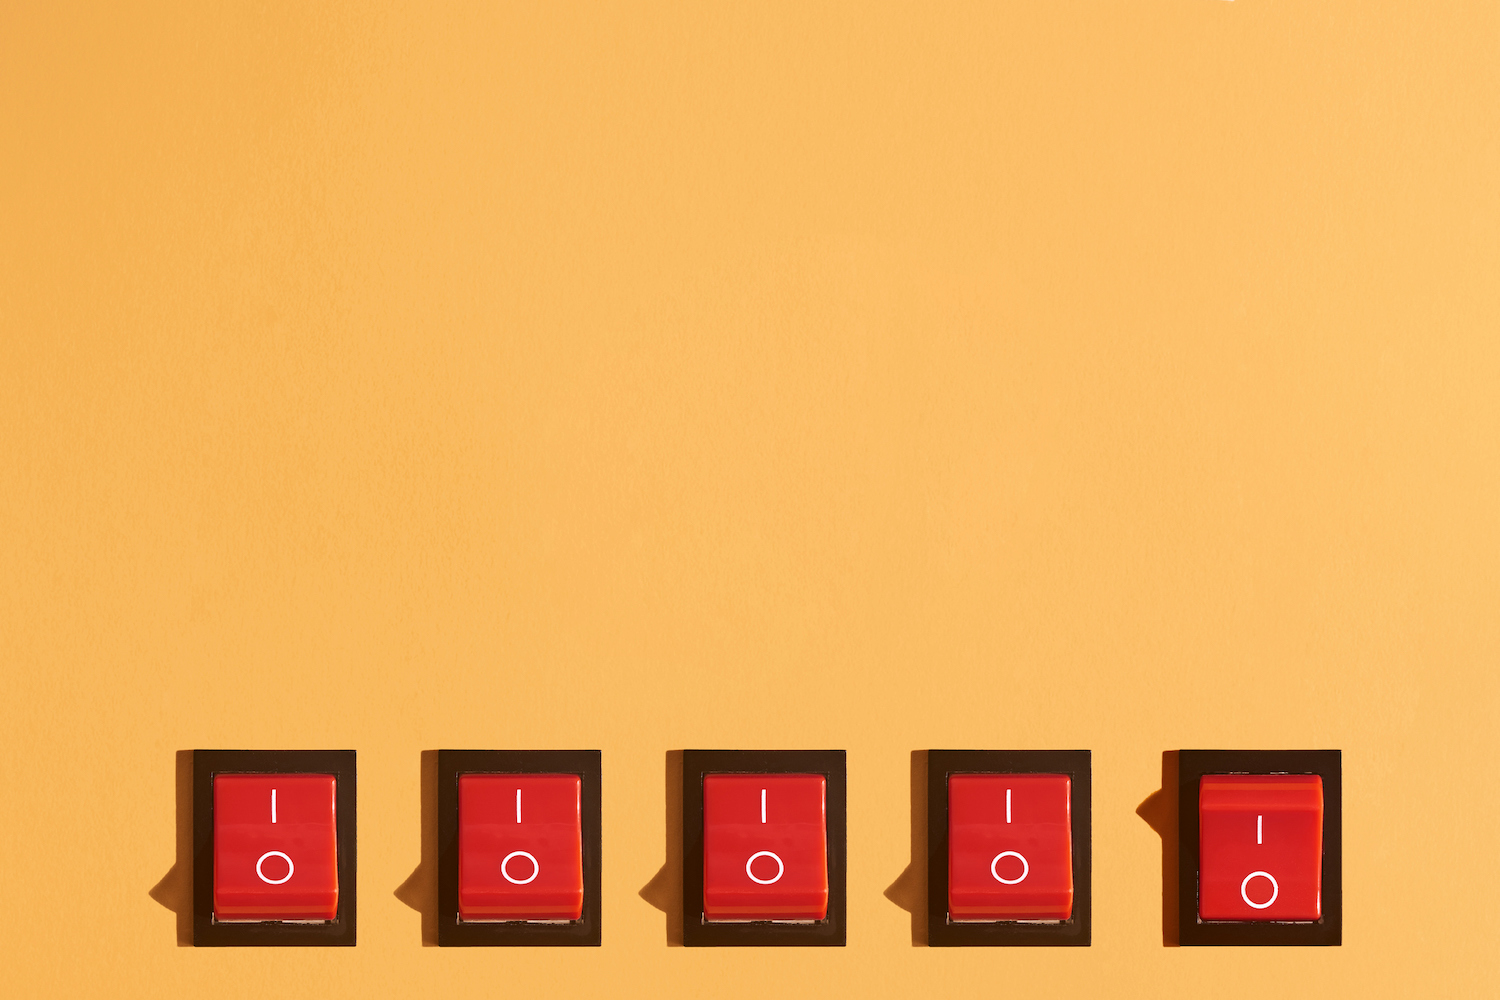 Five Toggle Switches On Orange Background